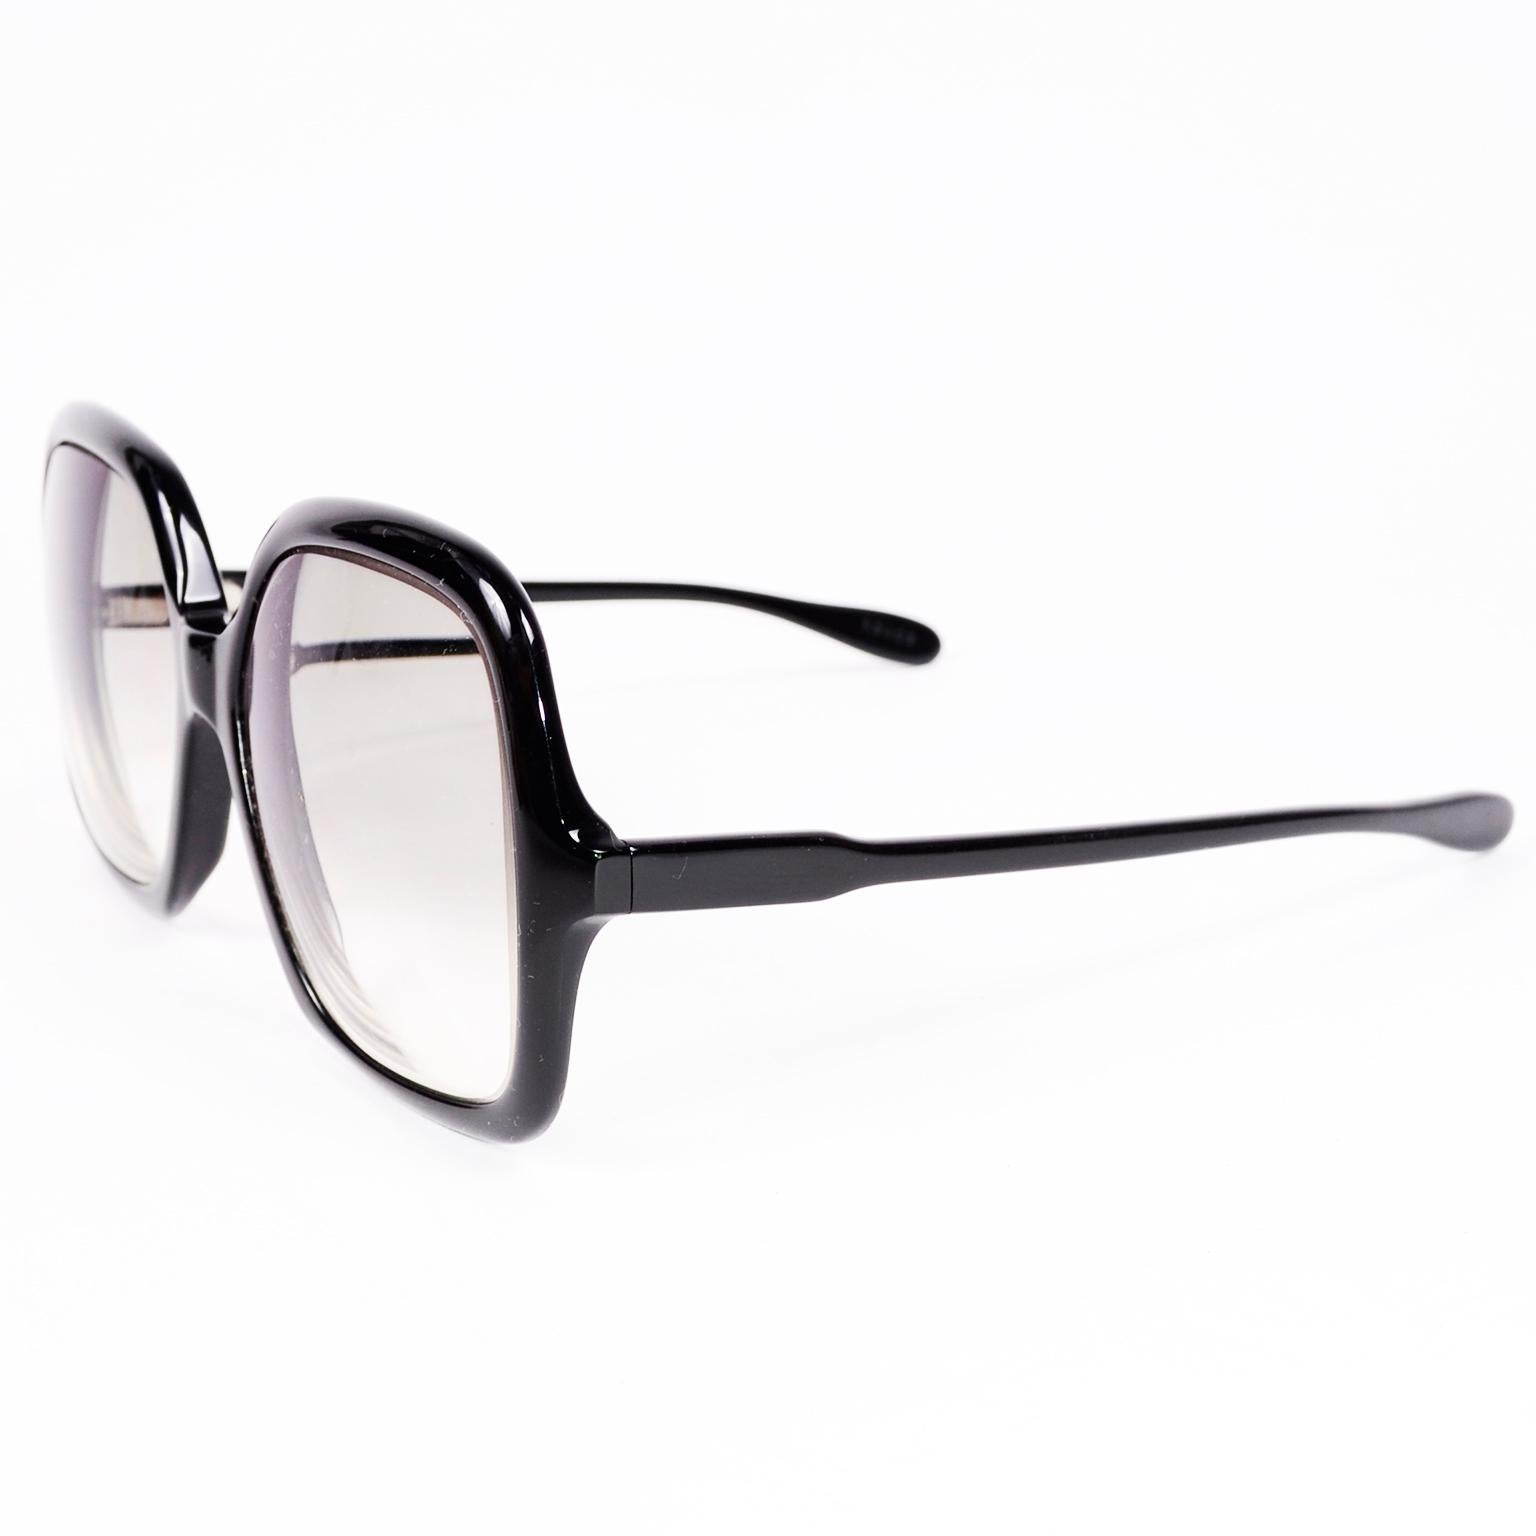 Friedrichs Palm Beach Vintage Oversized Black Eyeglass Frames Sunglasses 2